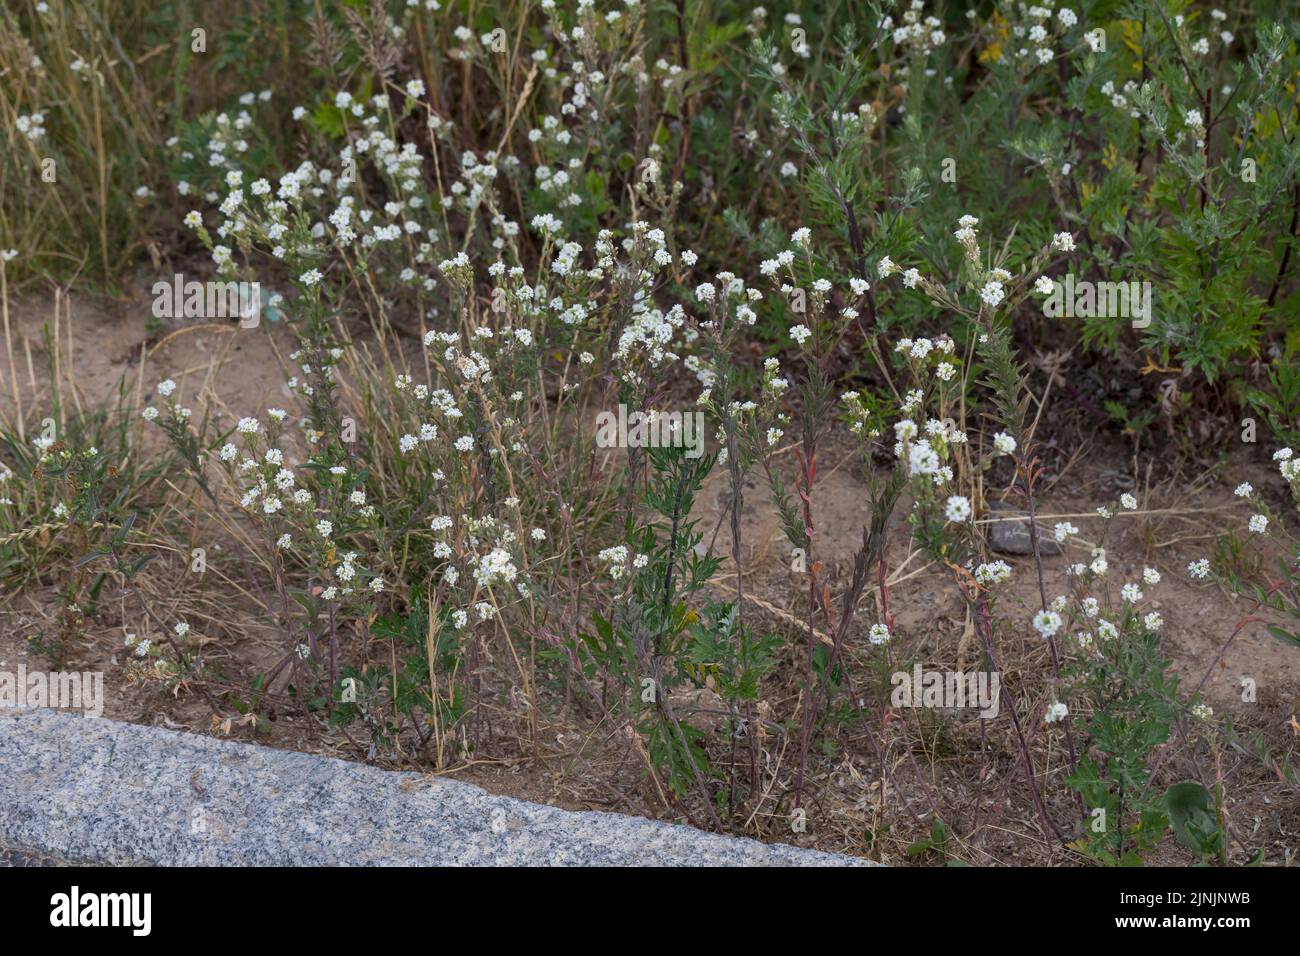 Hoary alyssum, Hoary false alyssum, Hoary false madwort (Berteroa incana), blooming at a road, Germany Stock Photo